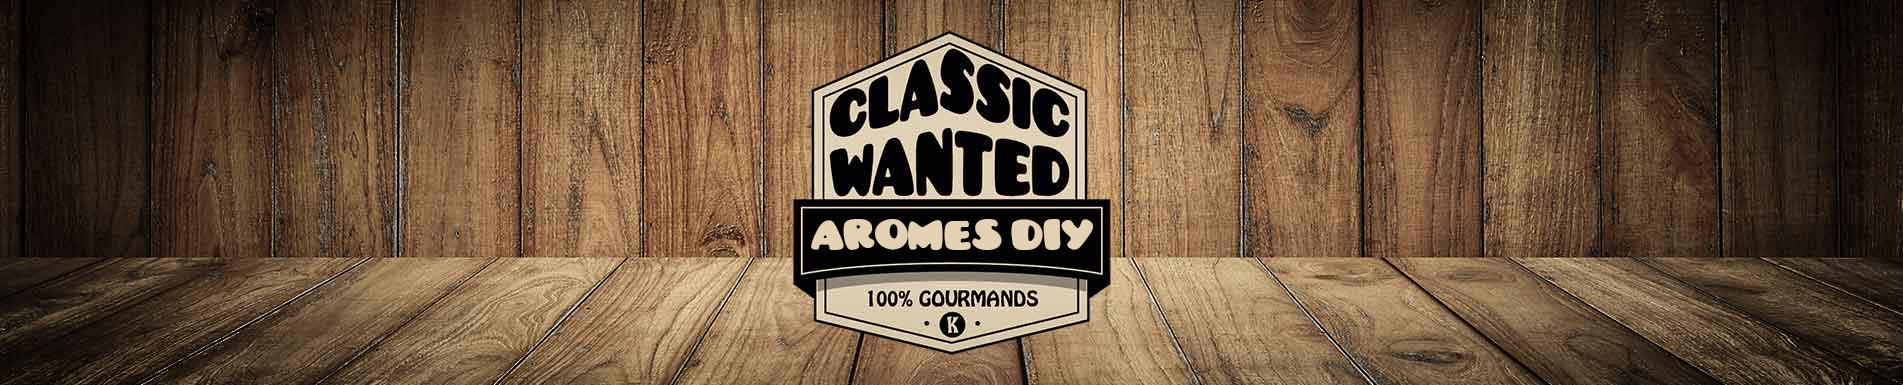 Arôme DIY VDLV Classic Wanted